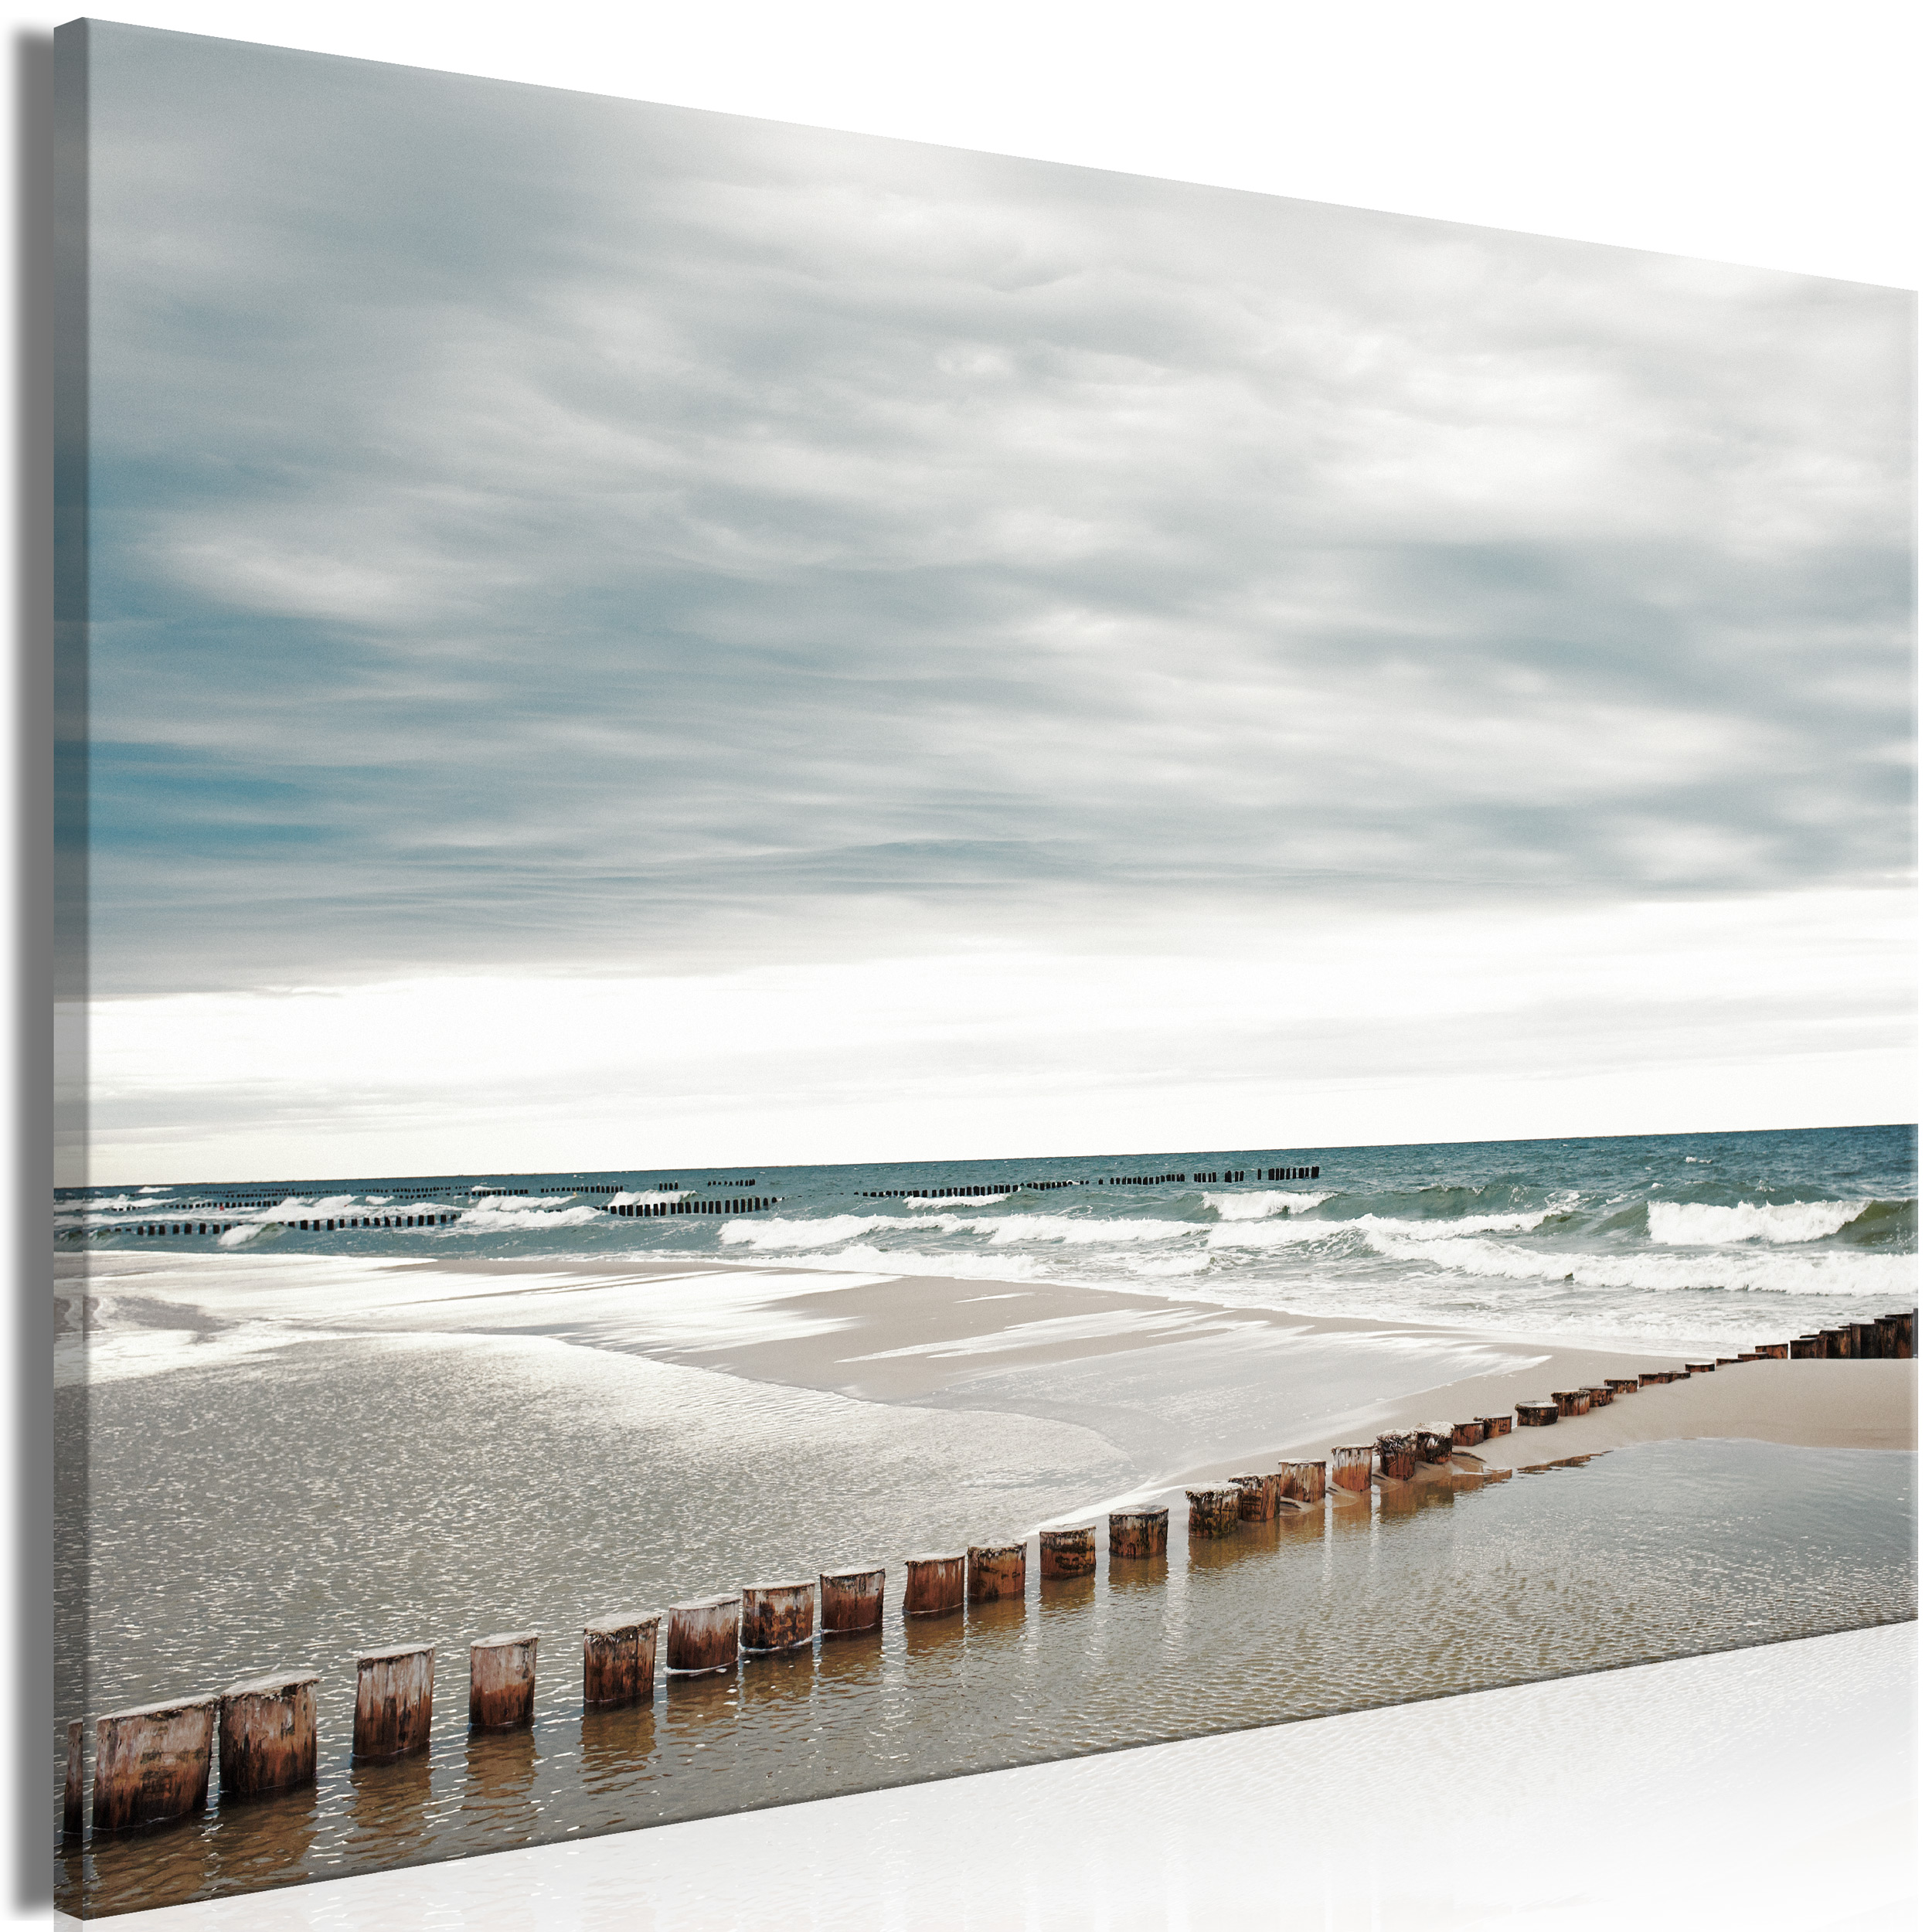 Leinwand Bild Wandbilder Bilder XXL Strand Meer Natur Landschaft Wohnzimmer 64 